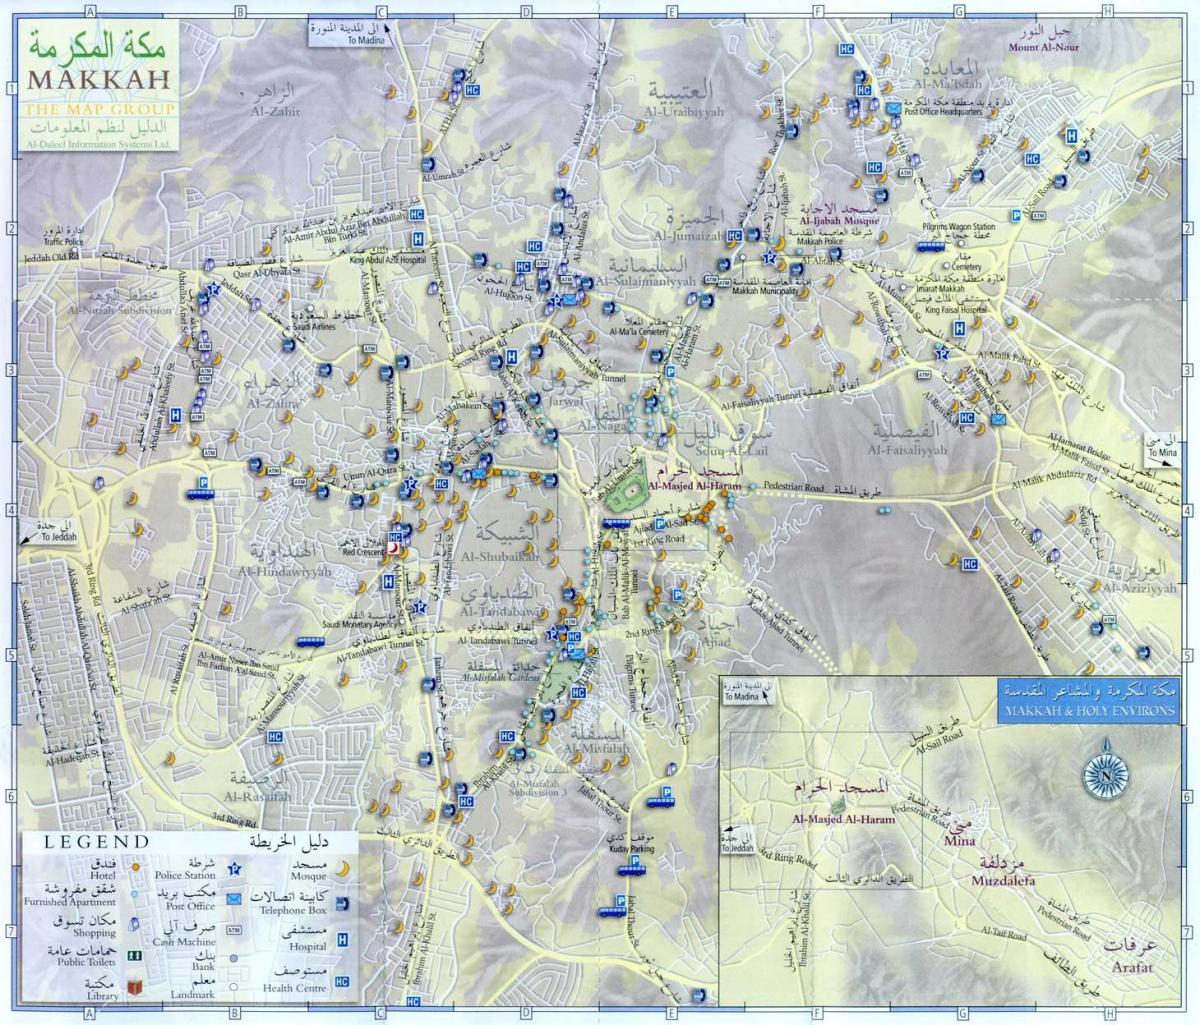 zemljevid Makkah pot